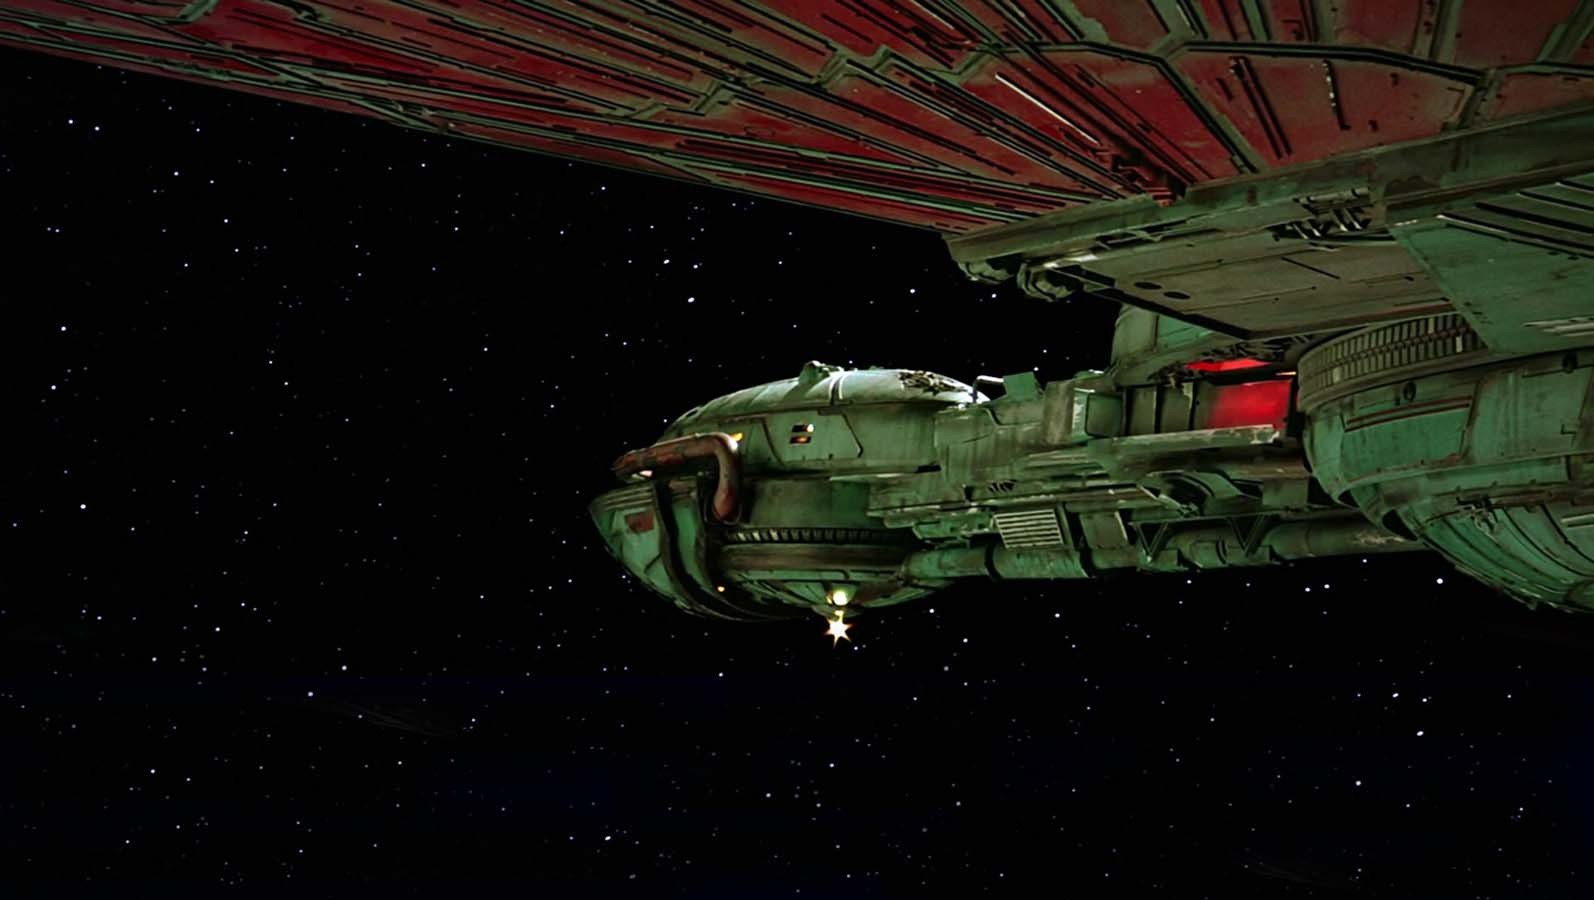 Science fiction star trek klingon bird of prey wallpapers hd desktop and mobile backgrounds